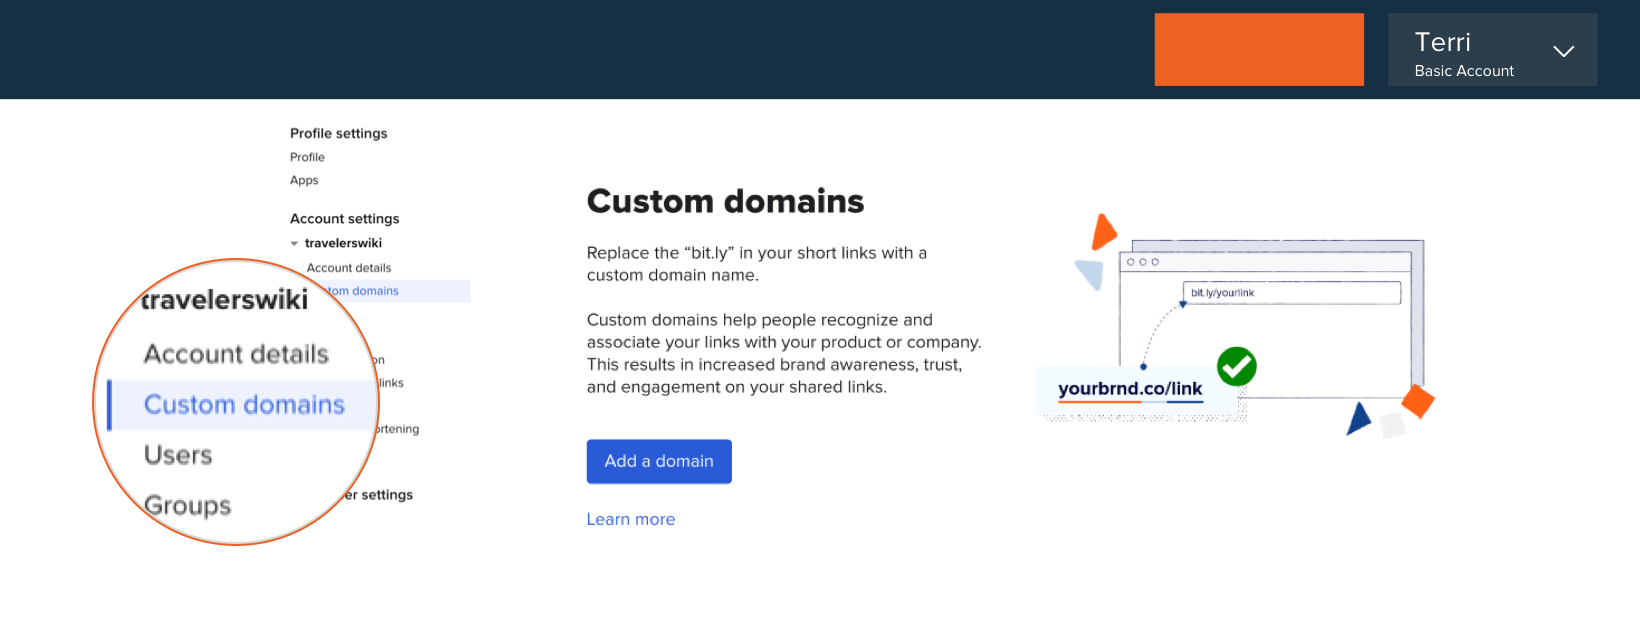 Custom domains menu item